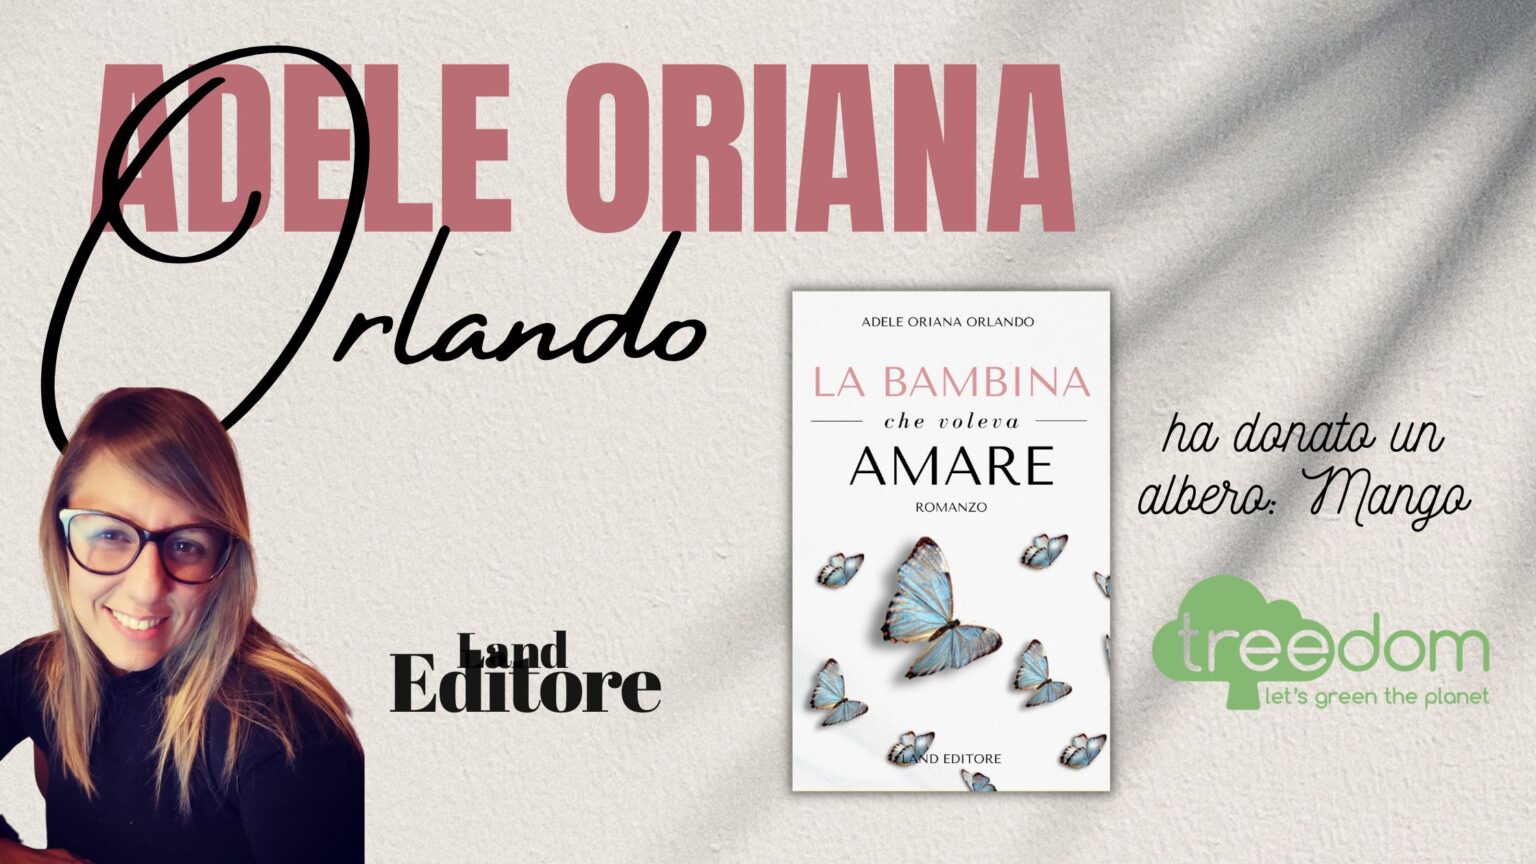 Adele Oriana Orlando